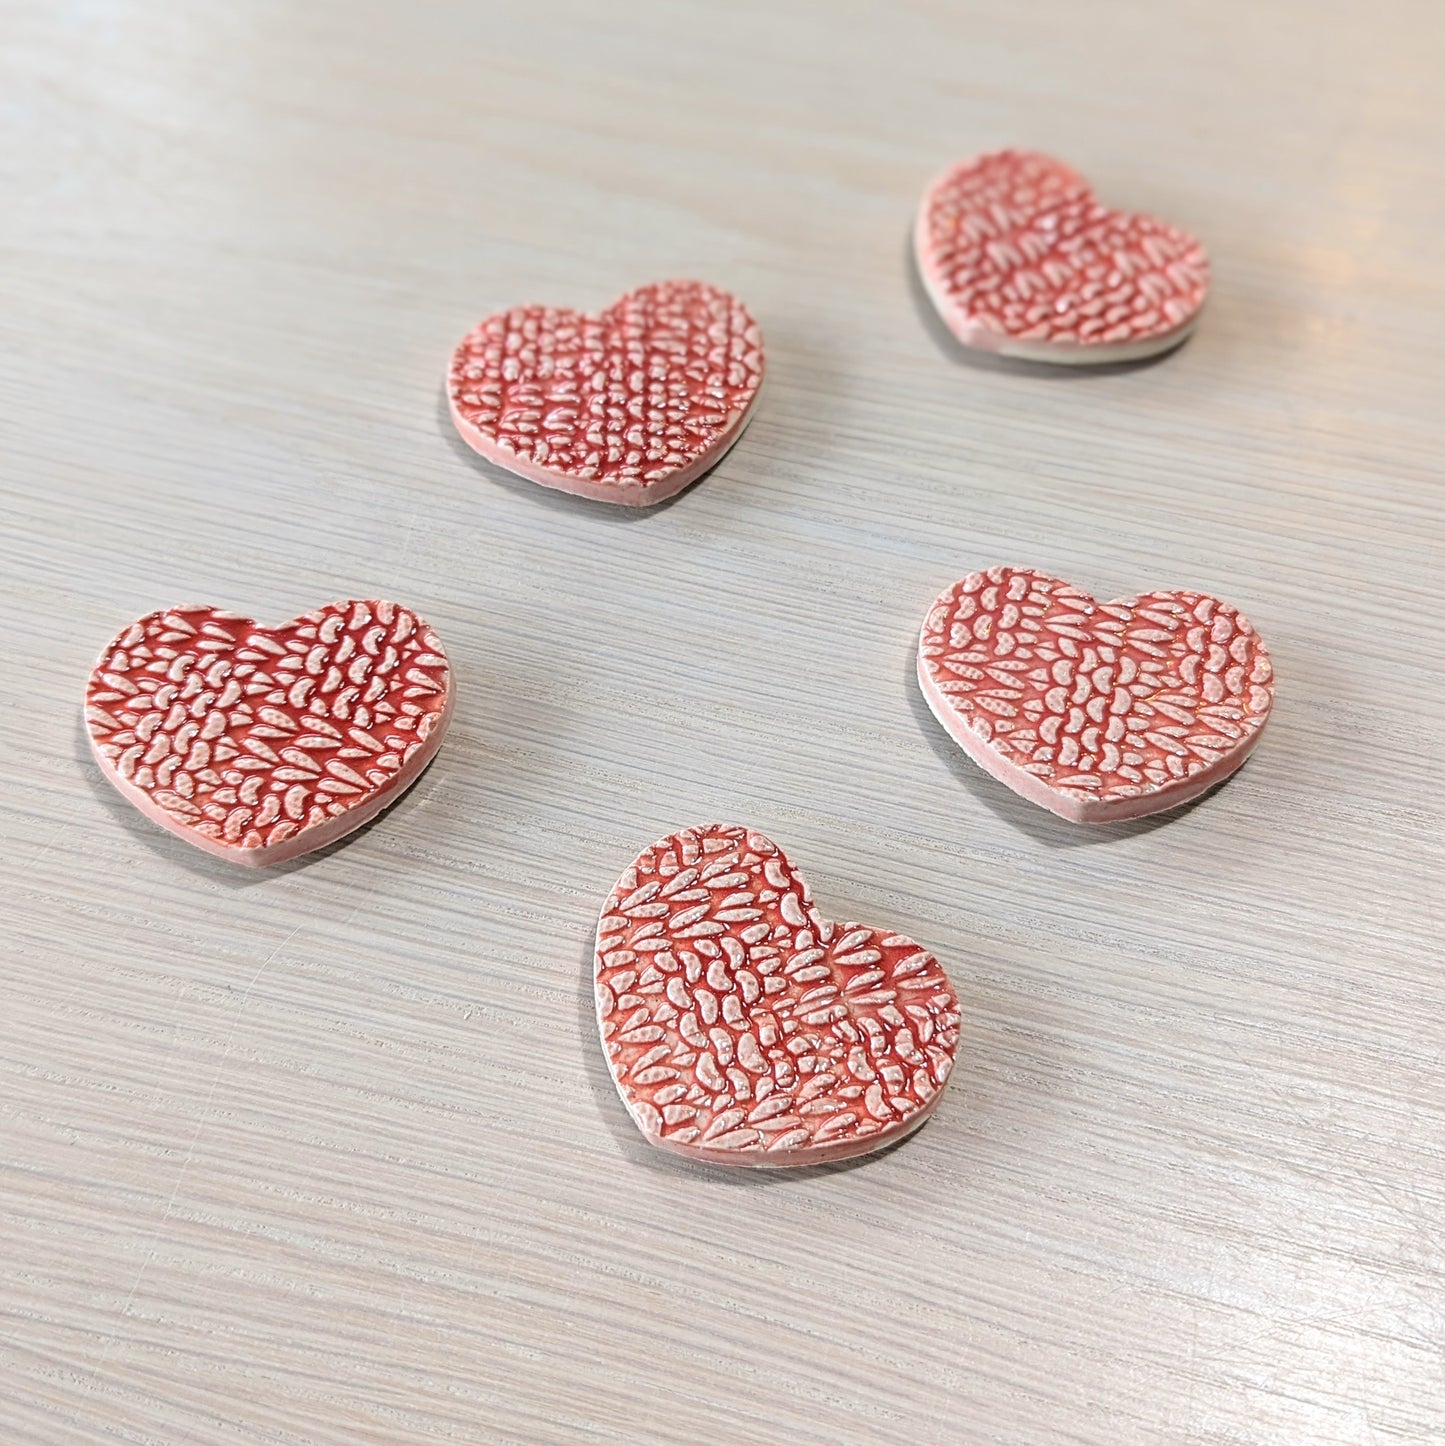 Handmade Sweater Heart Magnet